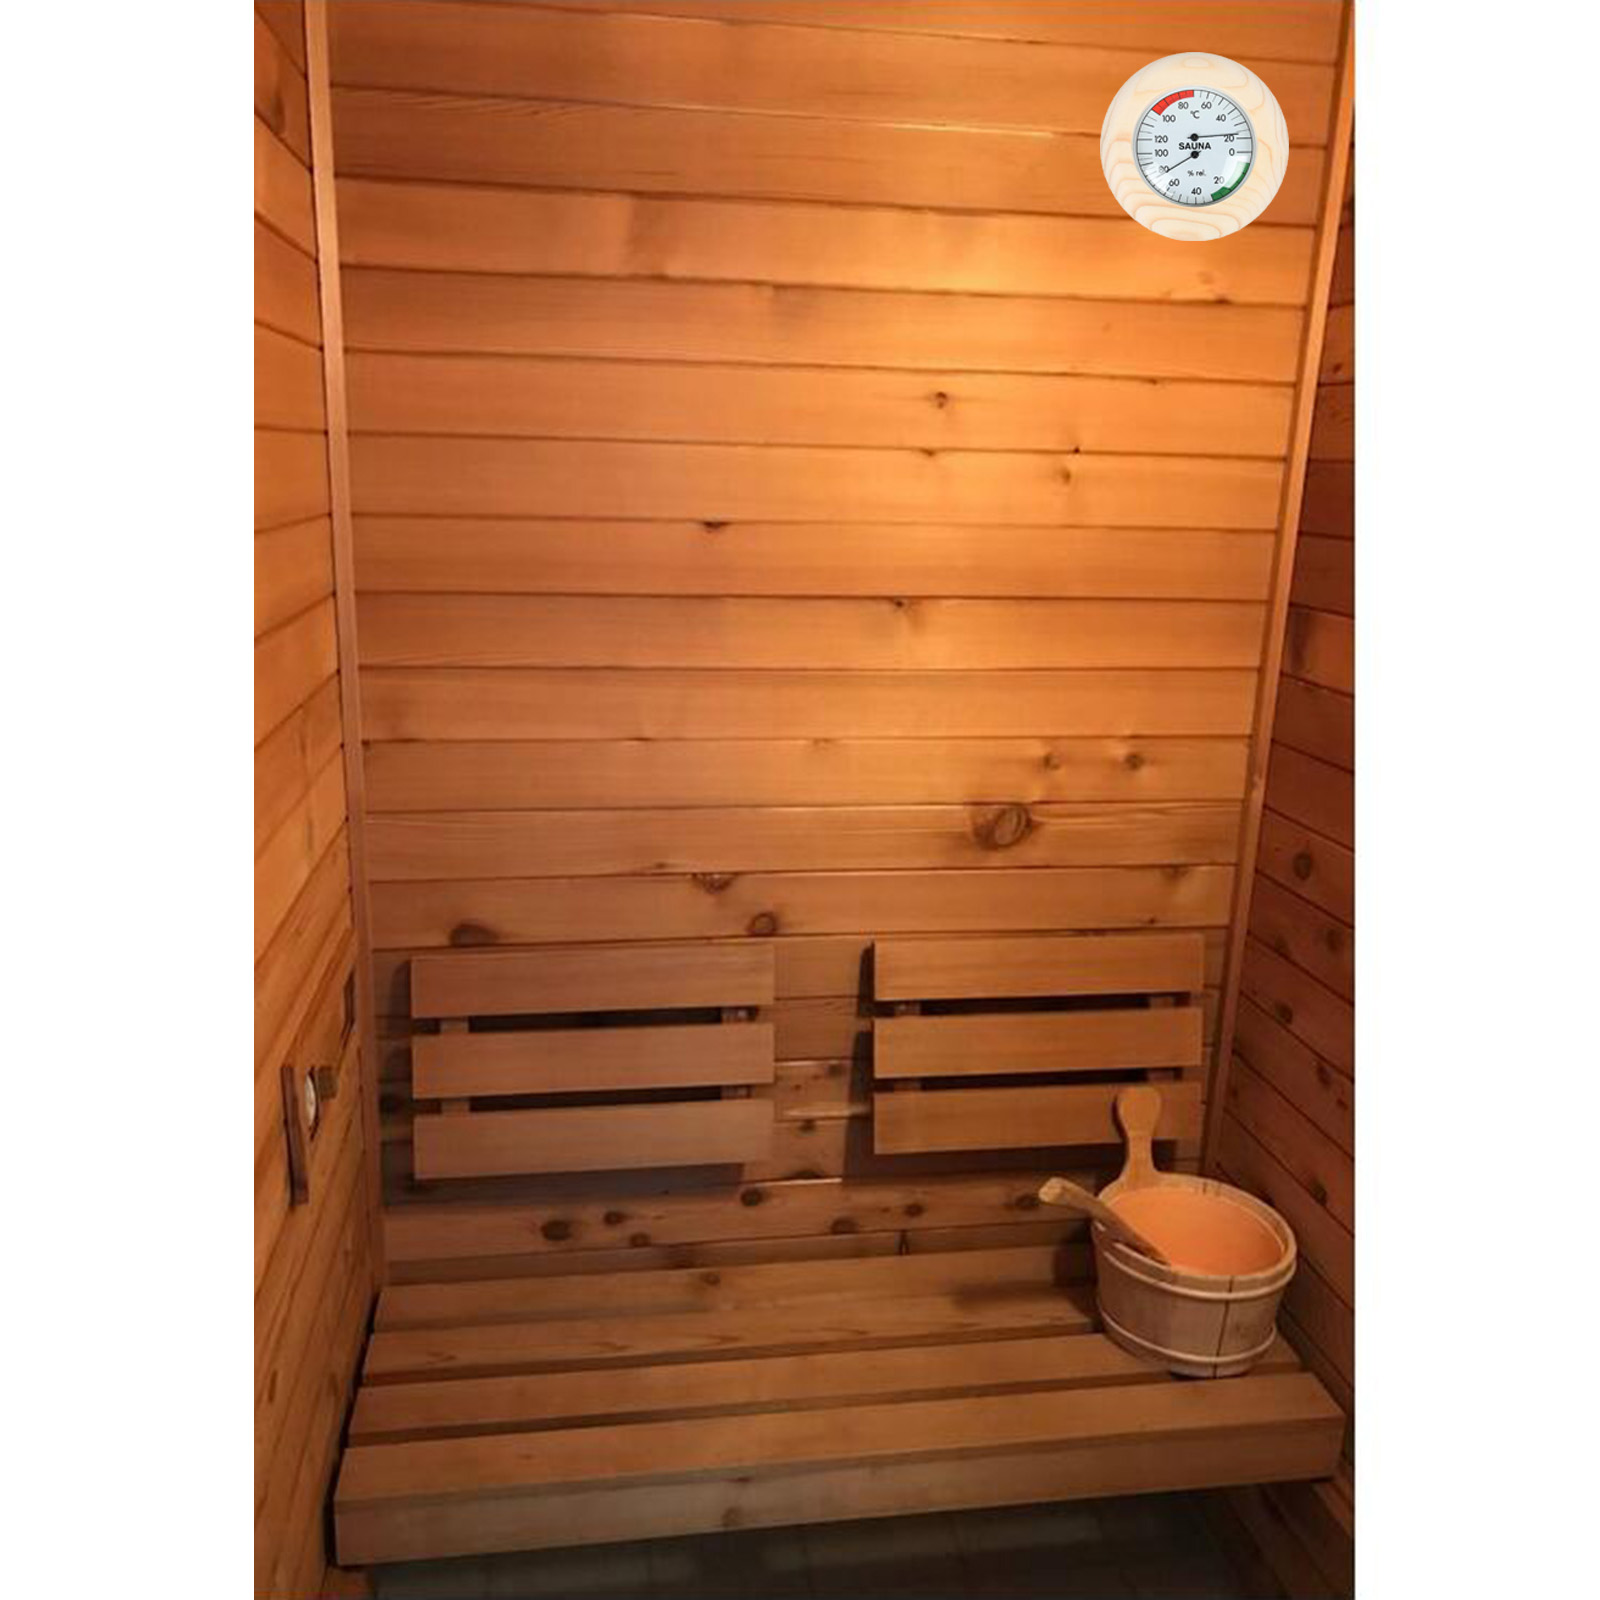 14.5cm Digital Wooden Sauna Thermometer and Hygrometer Sauna Room Accessory